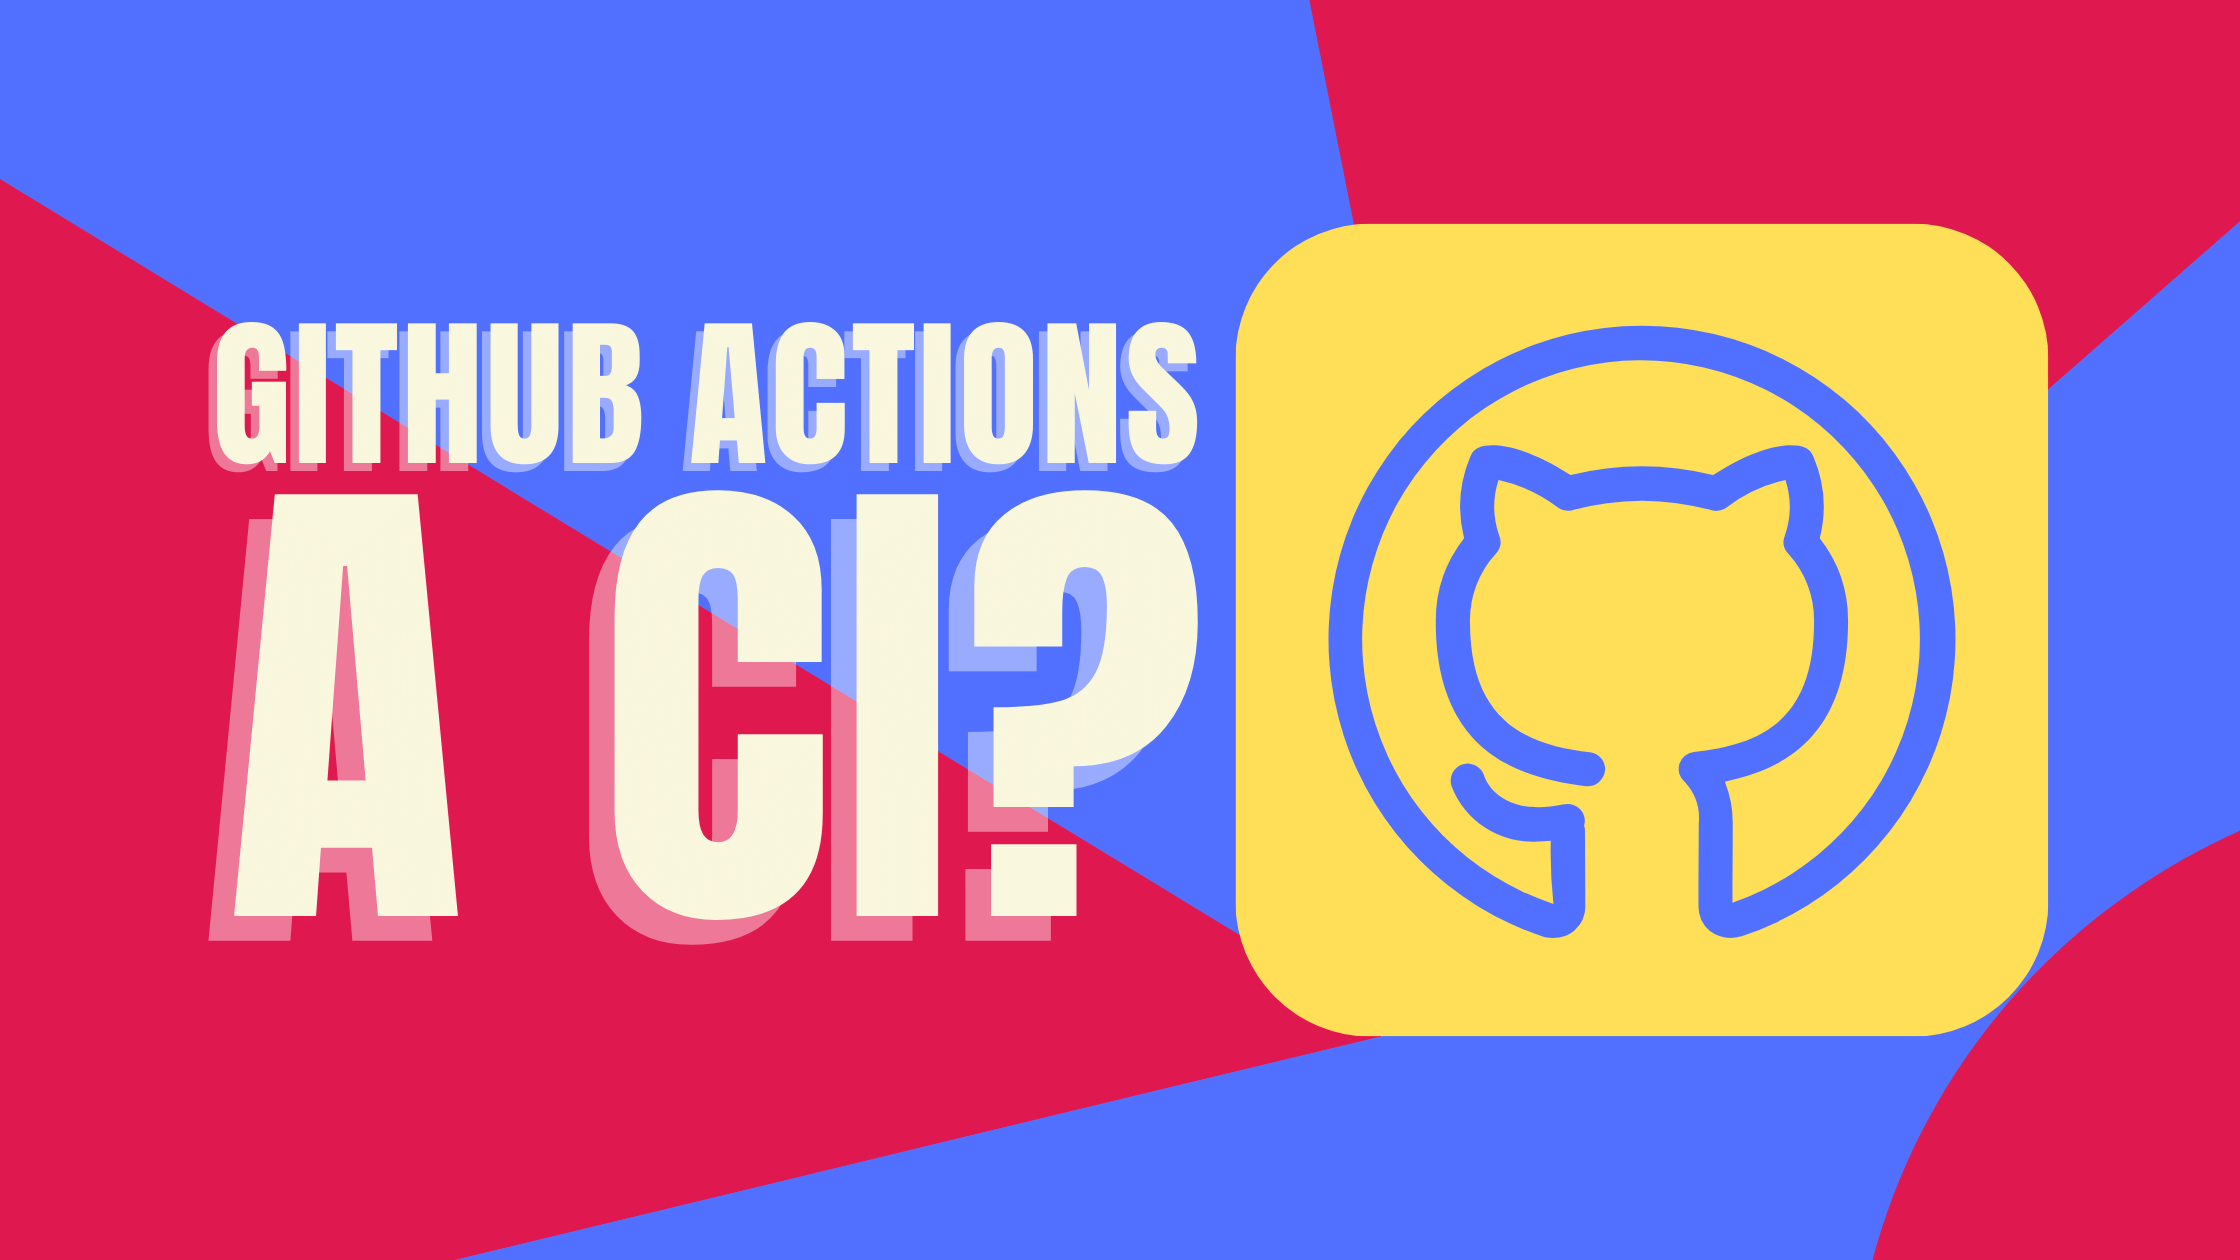 Is GitHub Actions a CI?